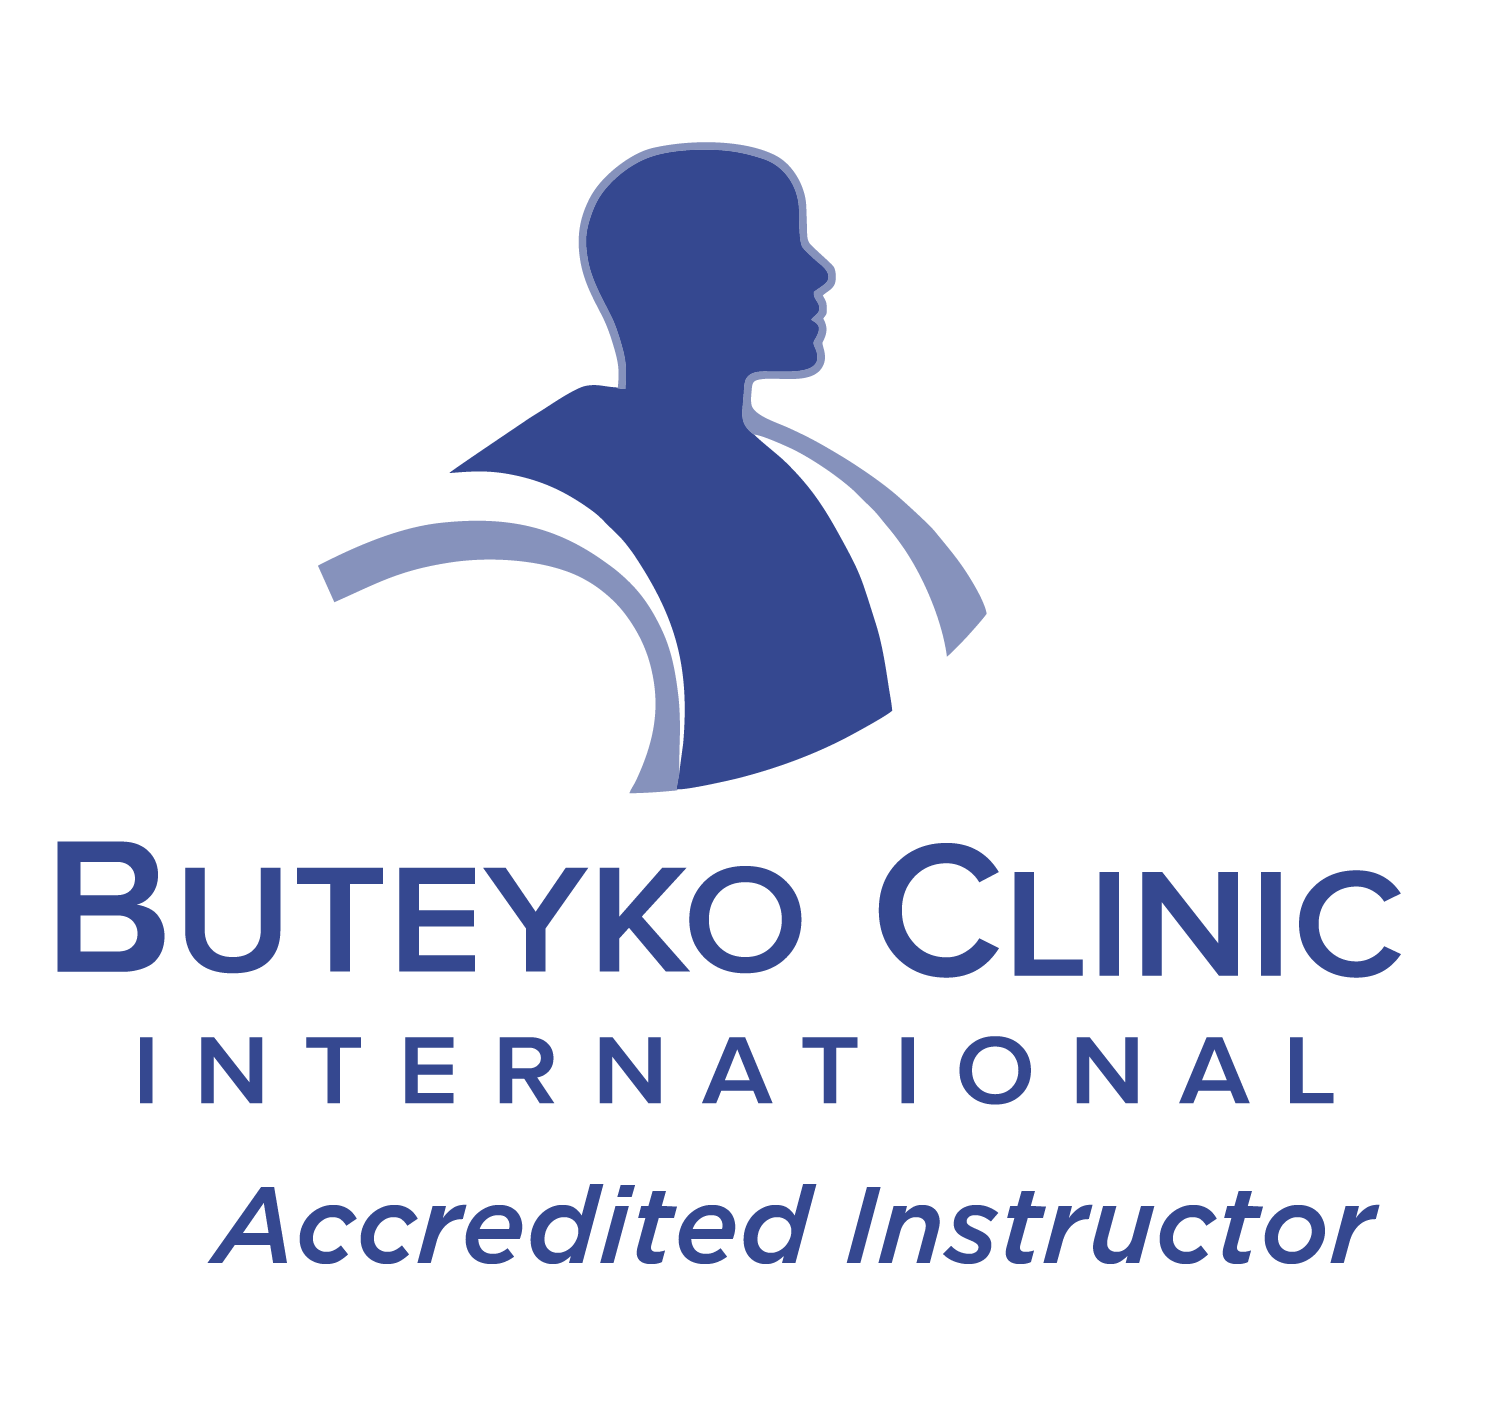 ButeykoClinic_logo_Acredited-Instructor-01.png